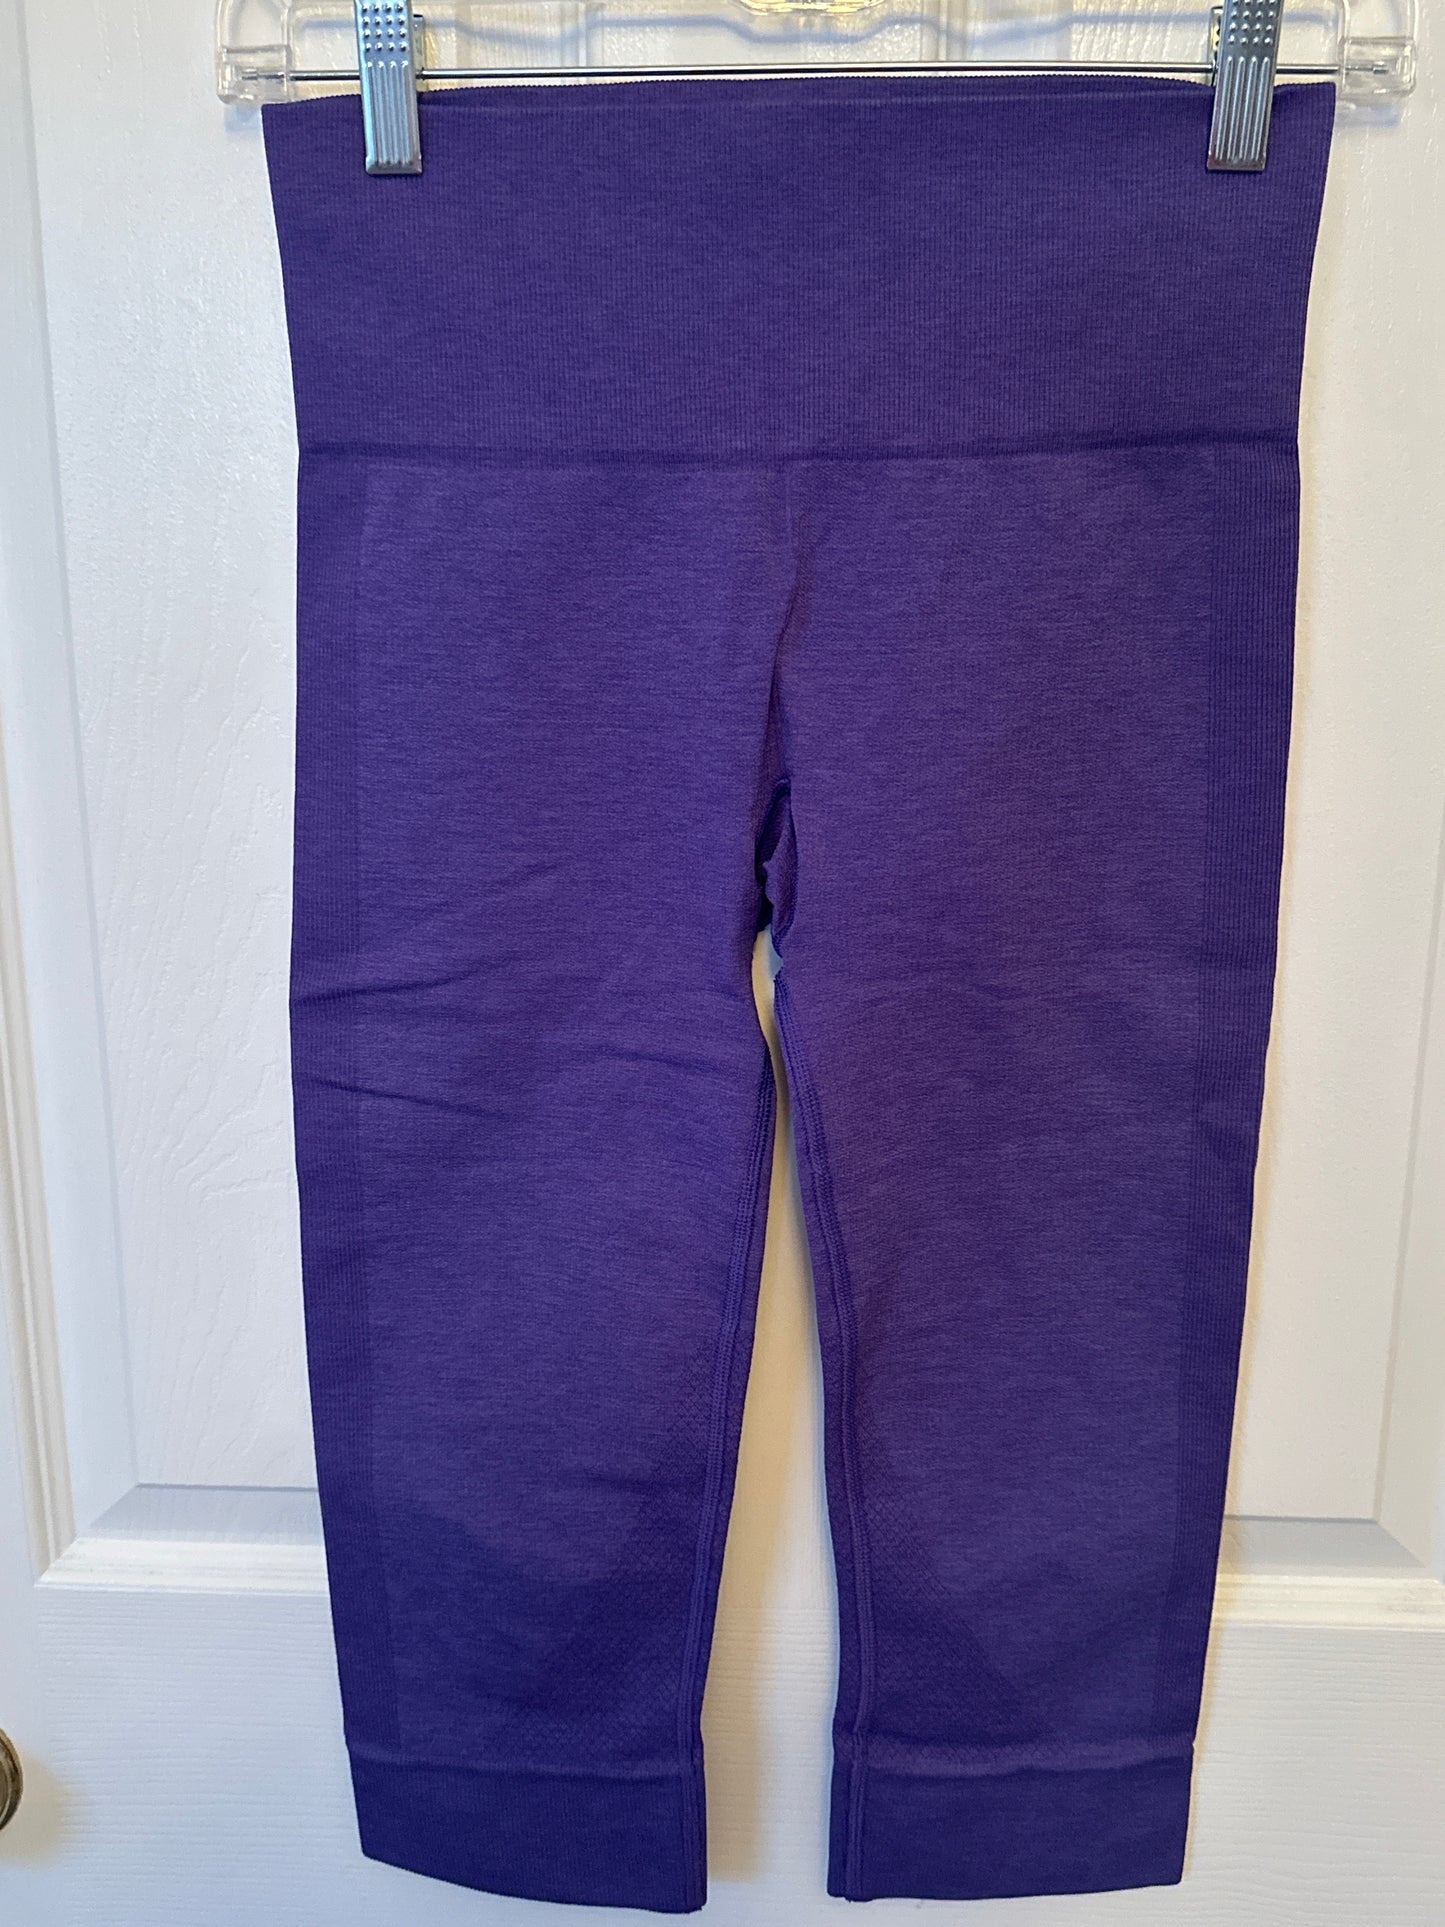 Lululemon Women’s Purple Pants Leggings Sz 4 Cropped Capri